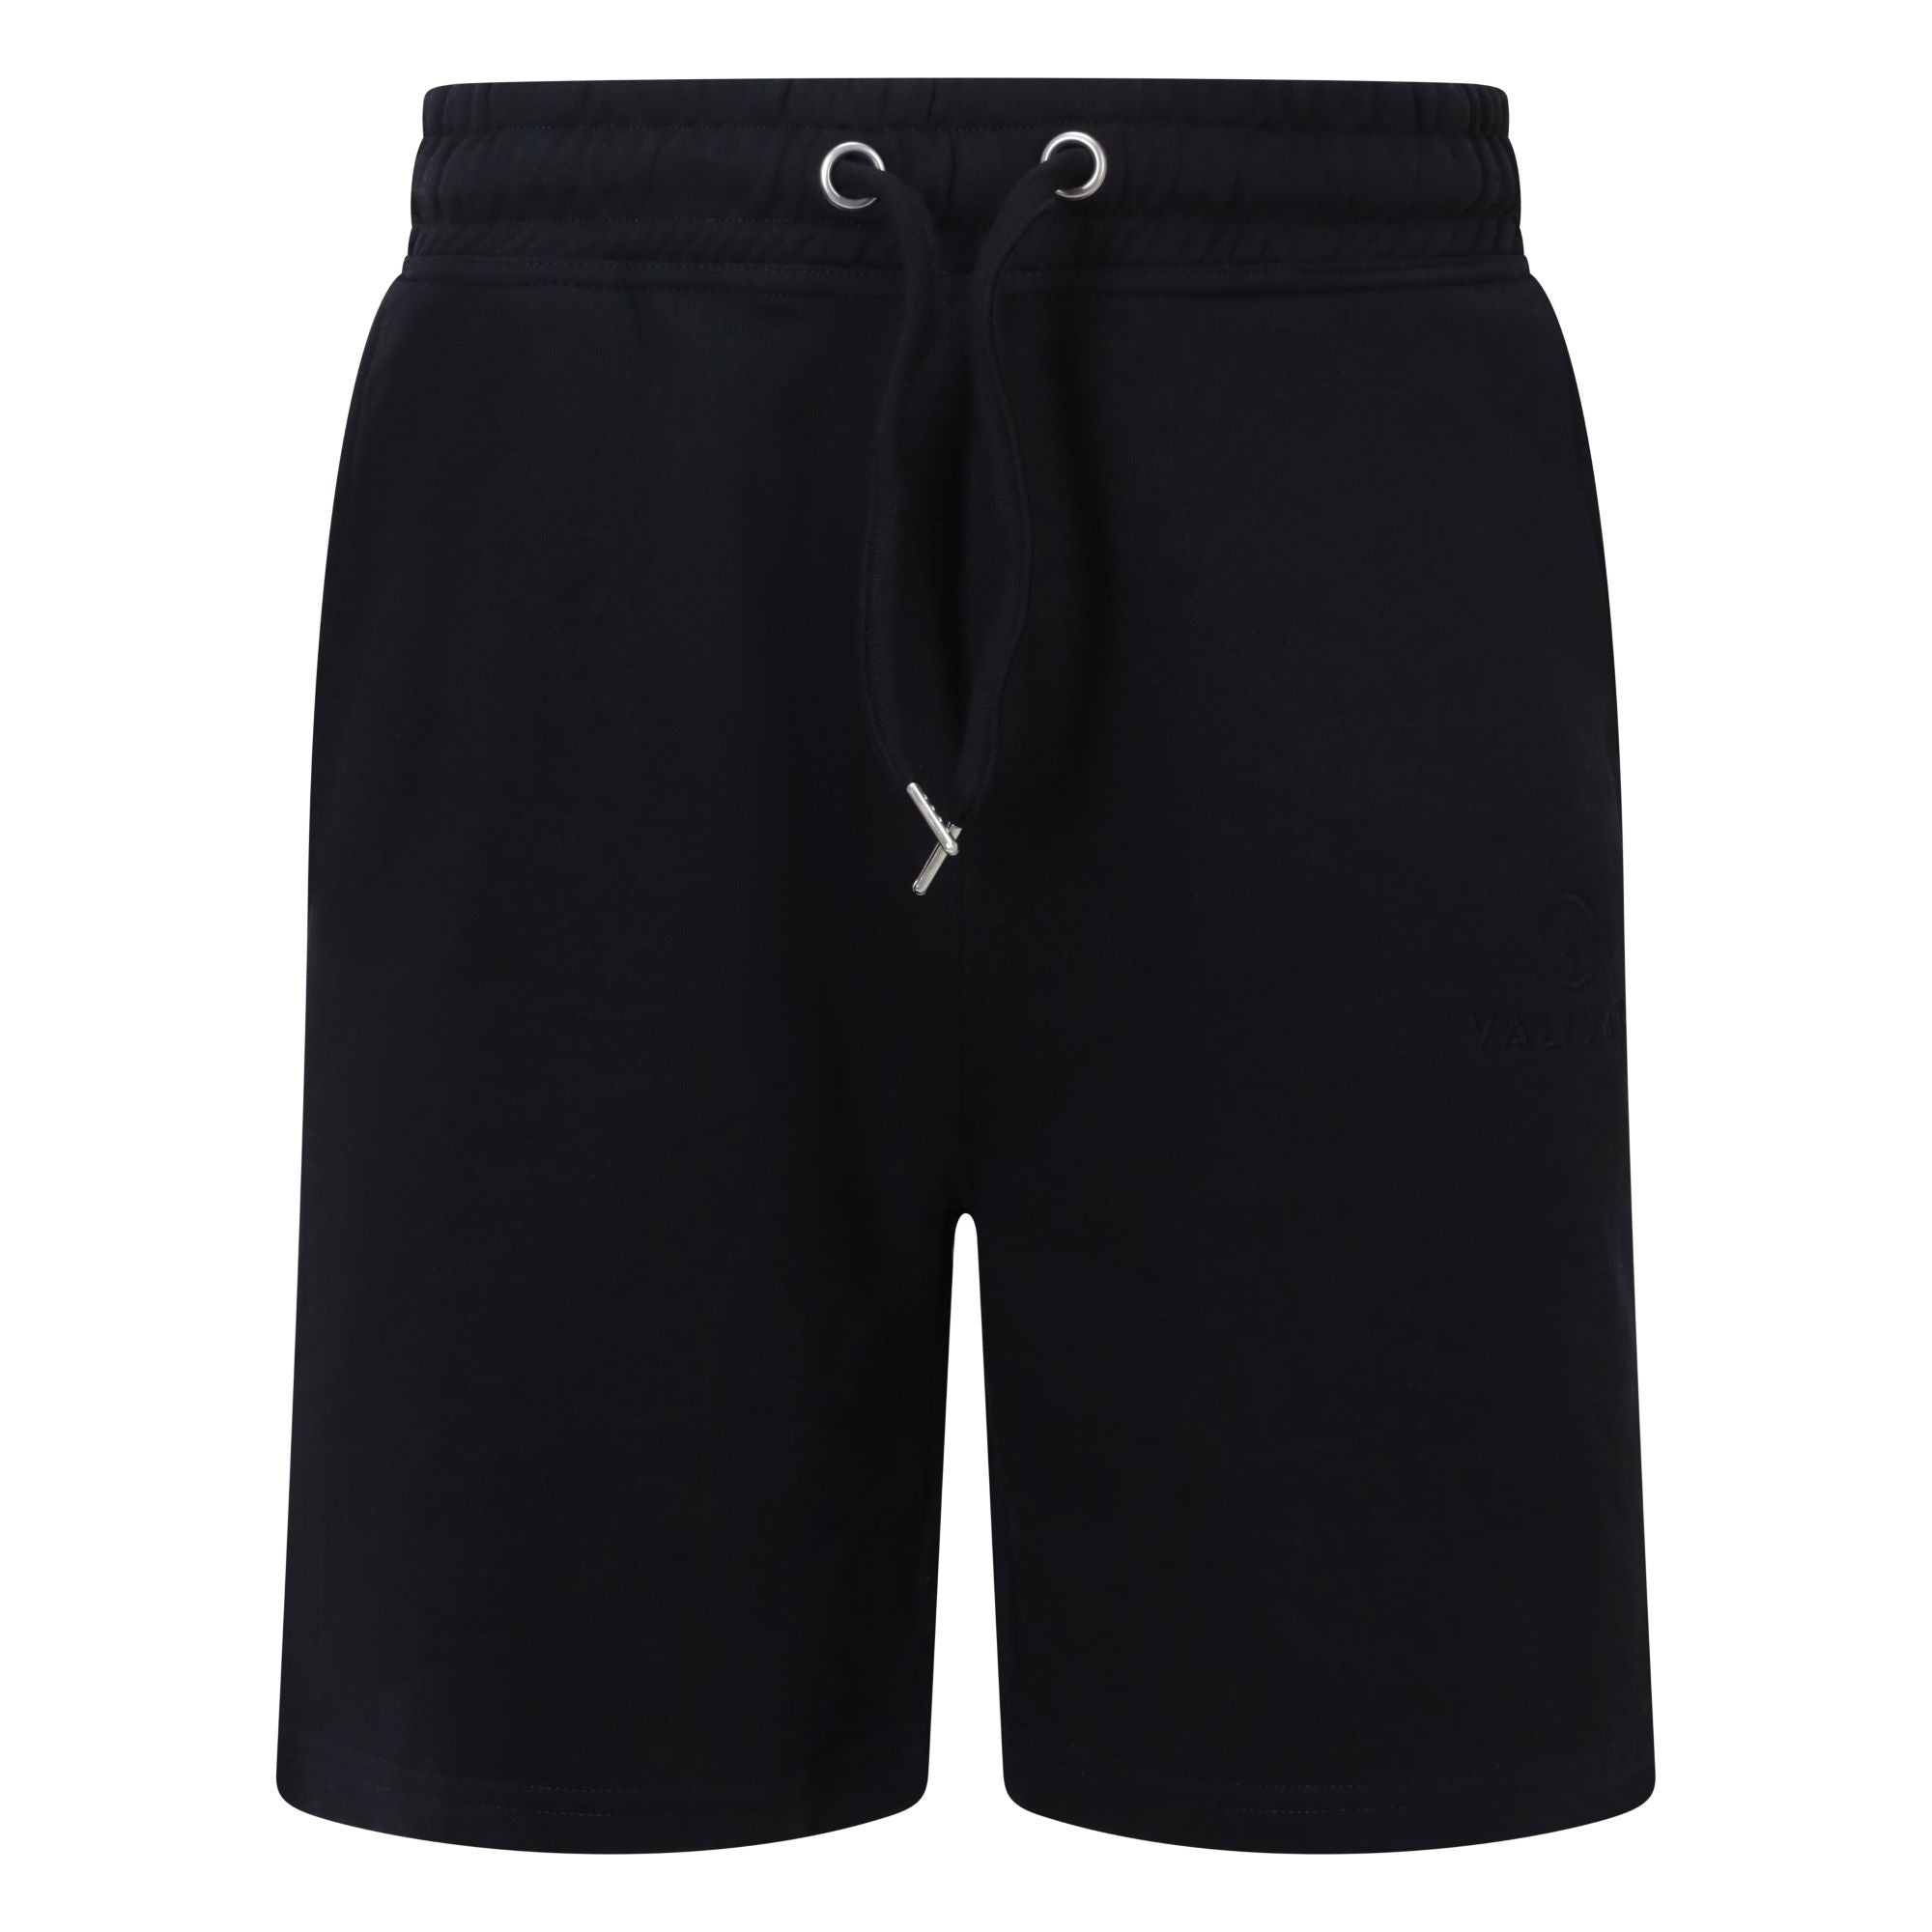 Validate Core Essentials Men's Stack logo Shorts Black